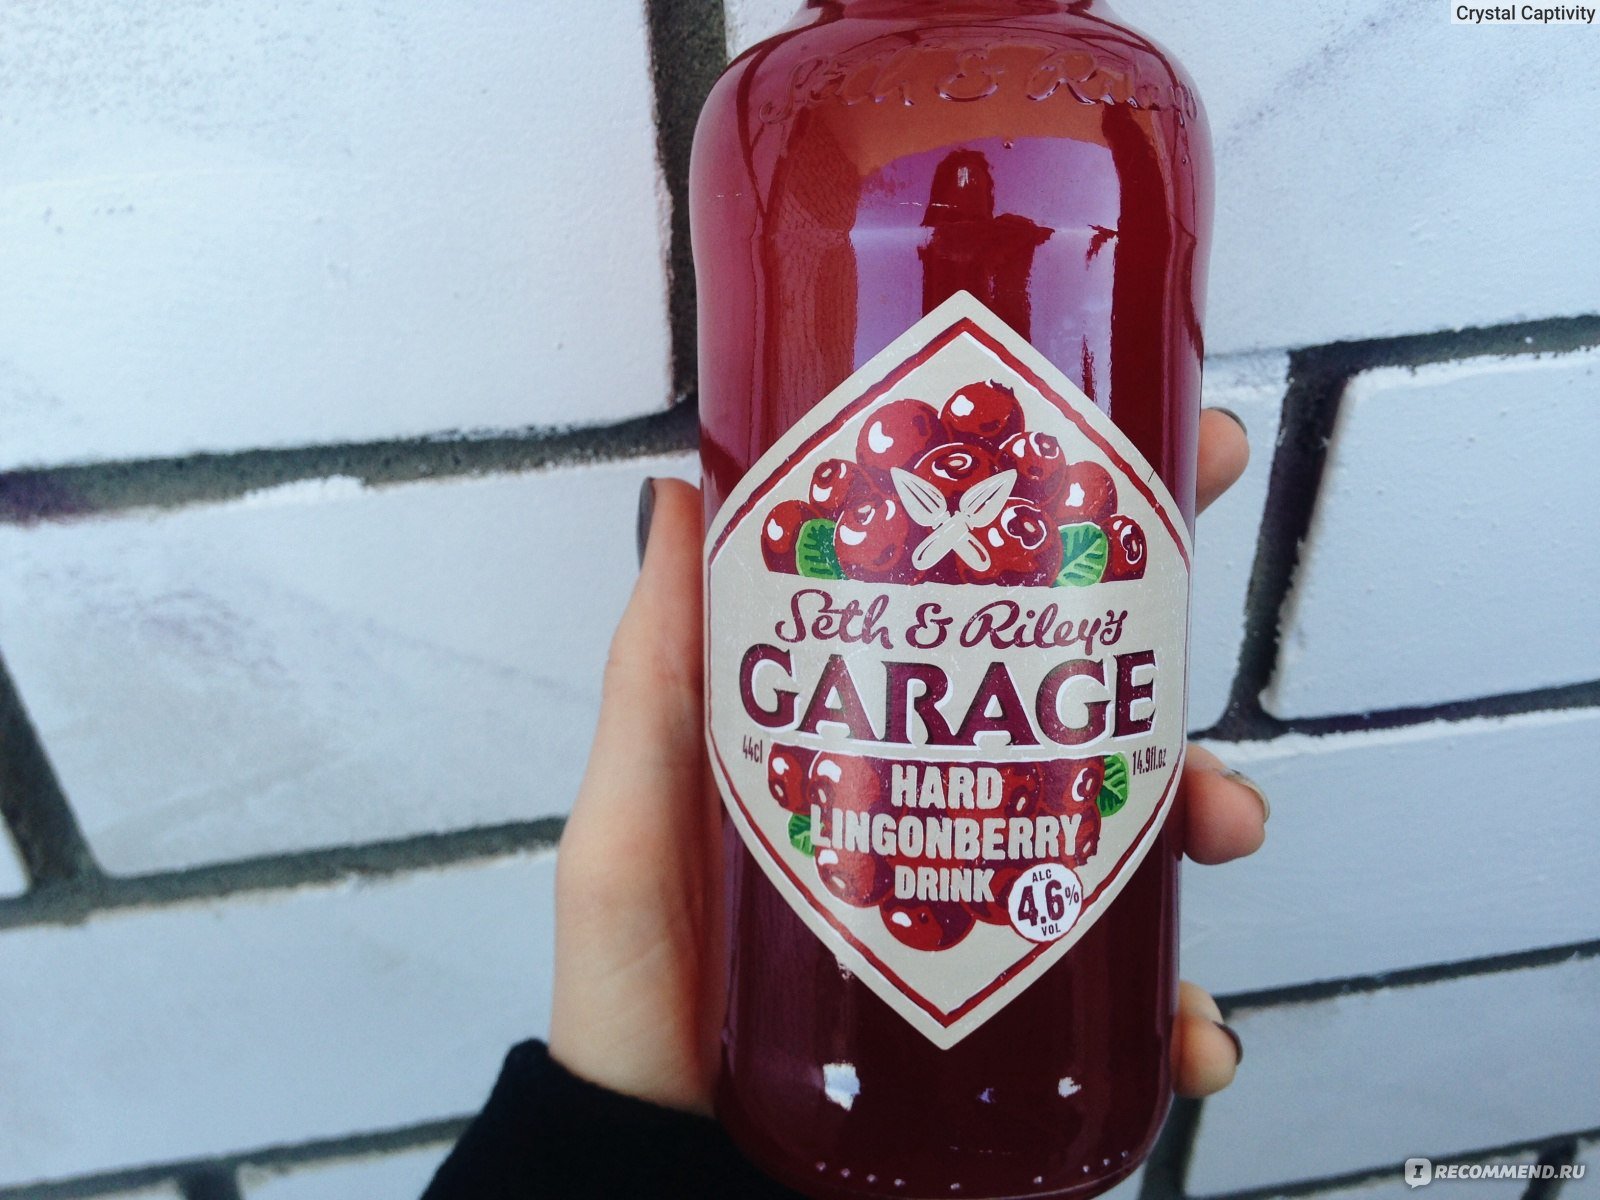 Seth riley garage. Пивной напиток гараж клюква. Пивной напиток Garage Seth & Riley’s Lingonberry 0.44 л. Пивной напиток гараж вишневый. Garage пиво вишня.